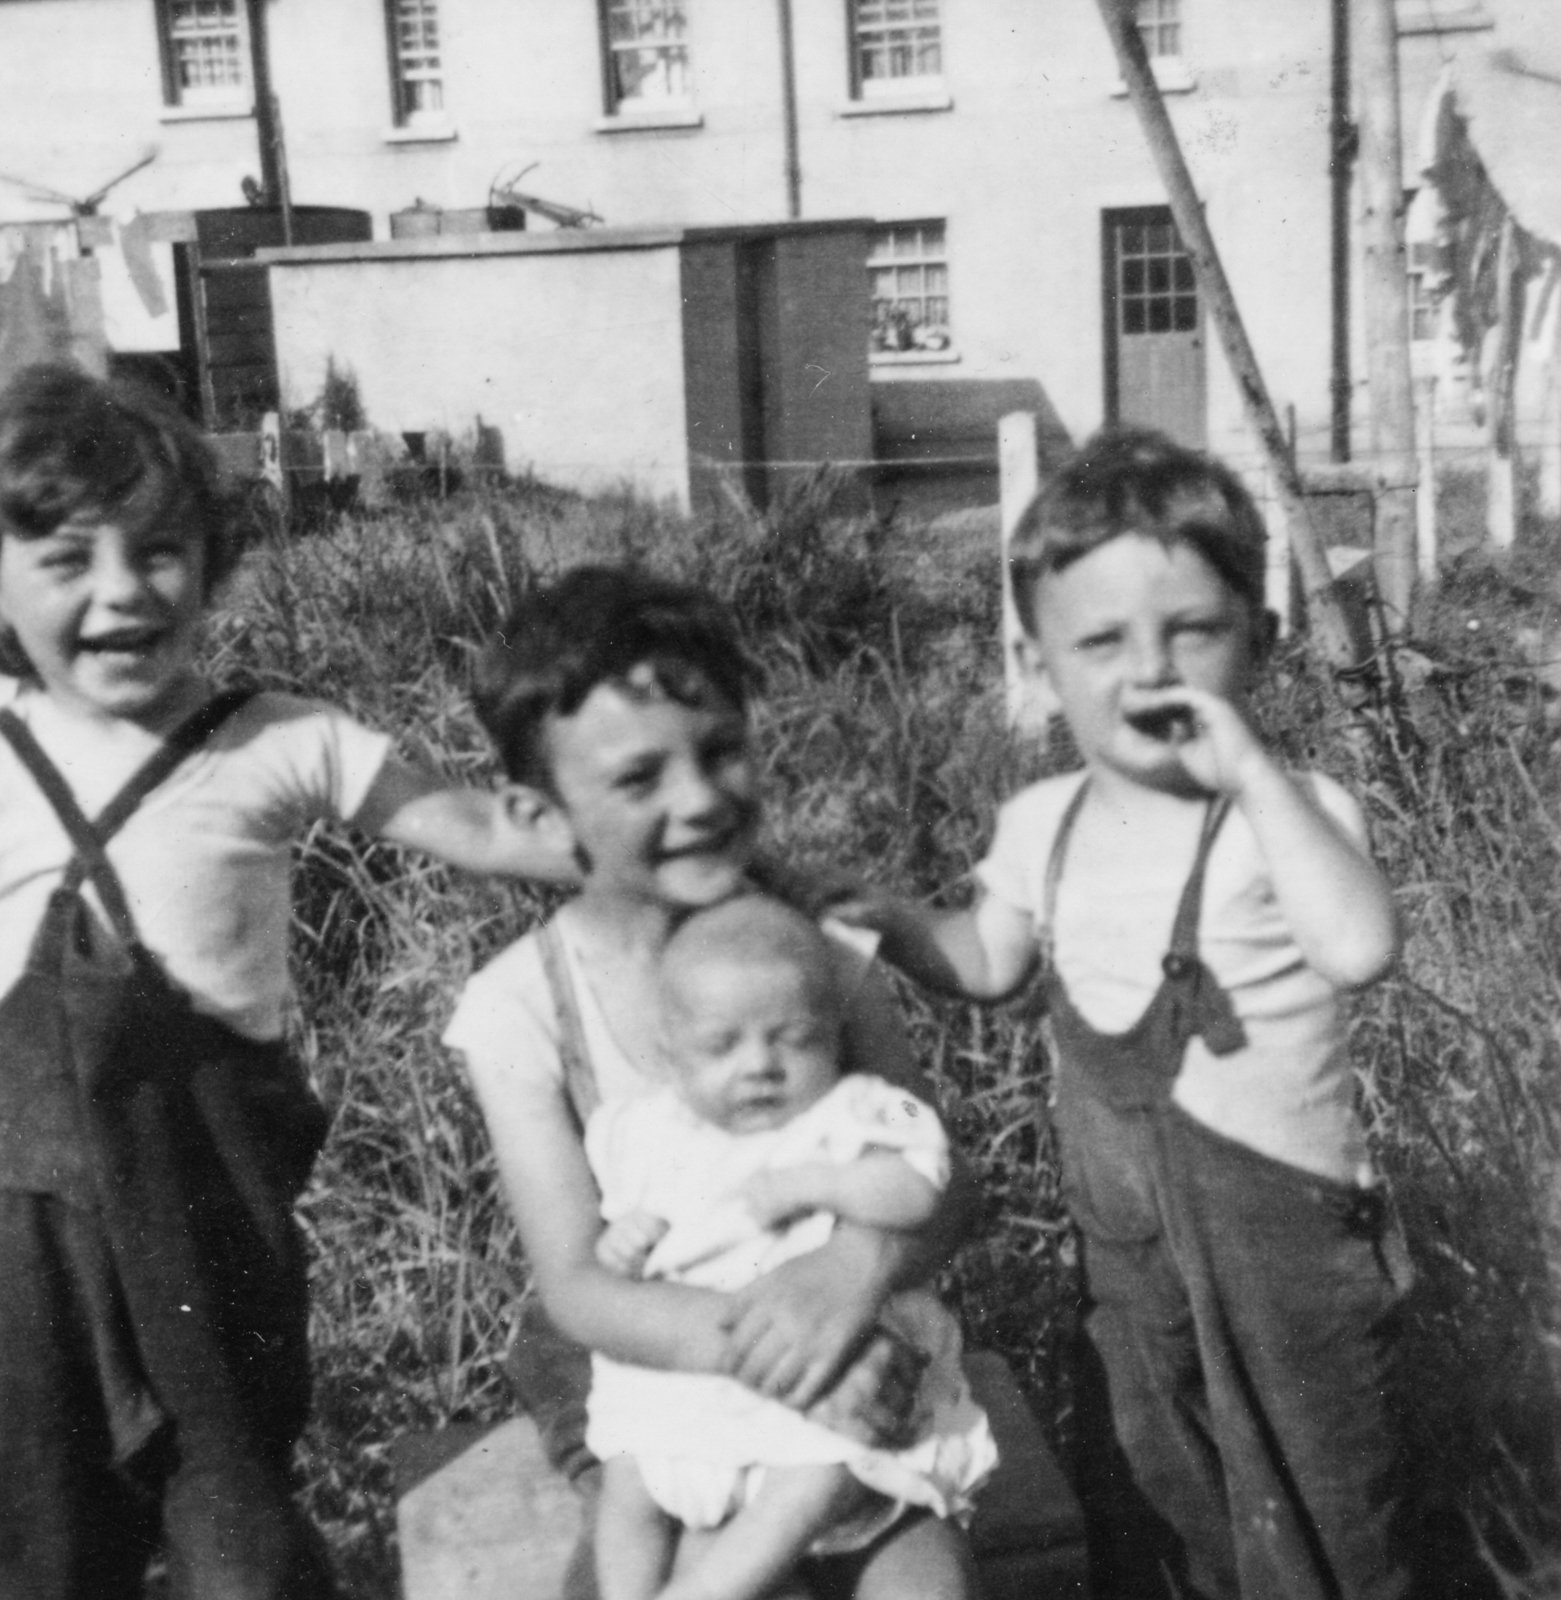 Grainne, Liam, Meehaul and Fionnghuala Smith at Glavin’s Terrace in Cobh, Cork c. 1956.